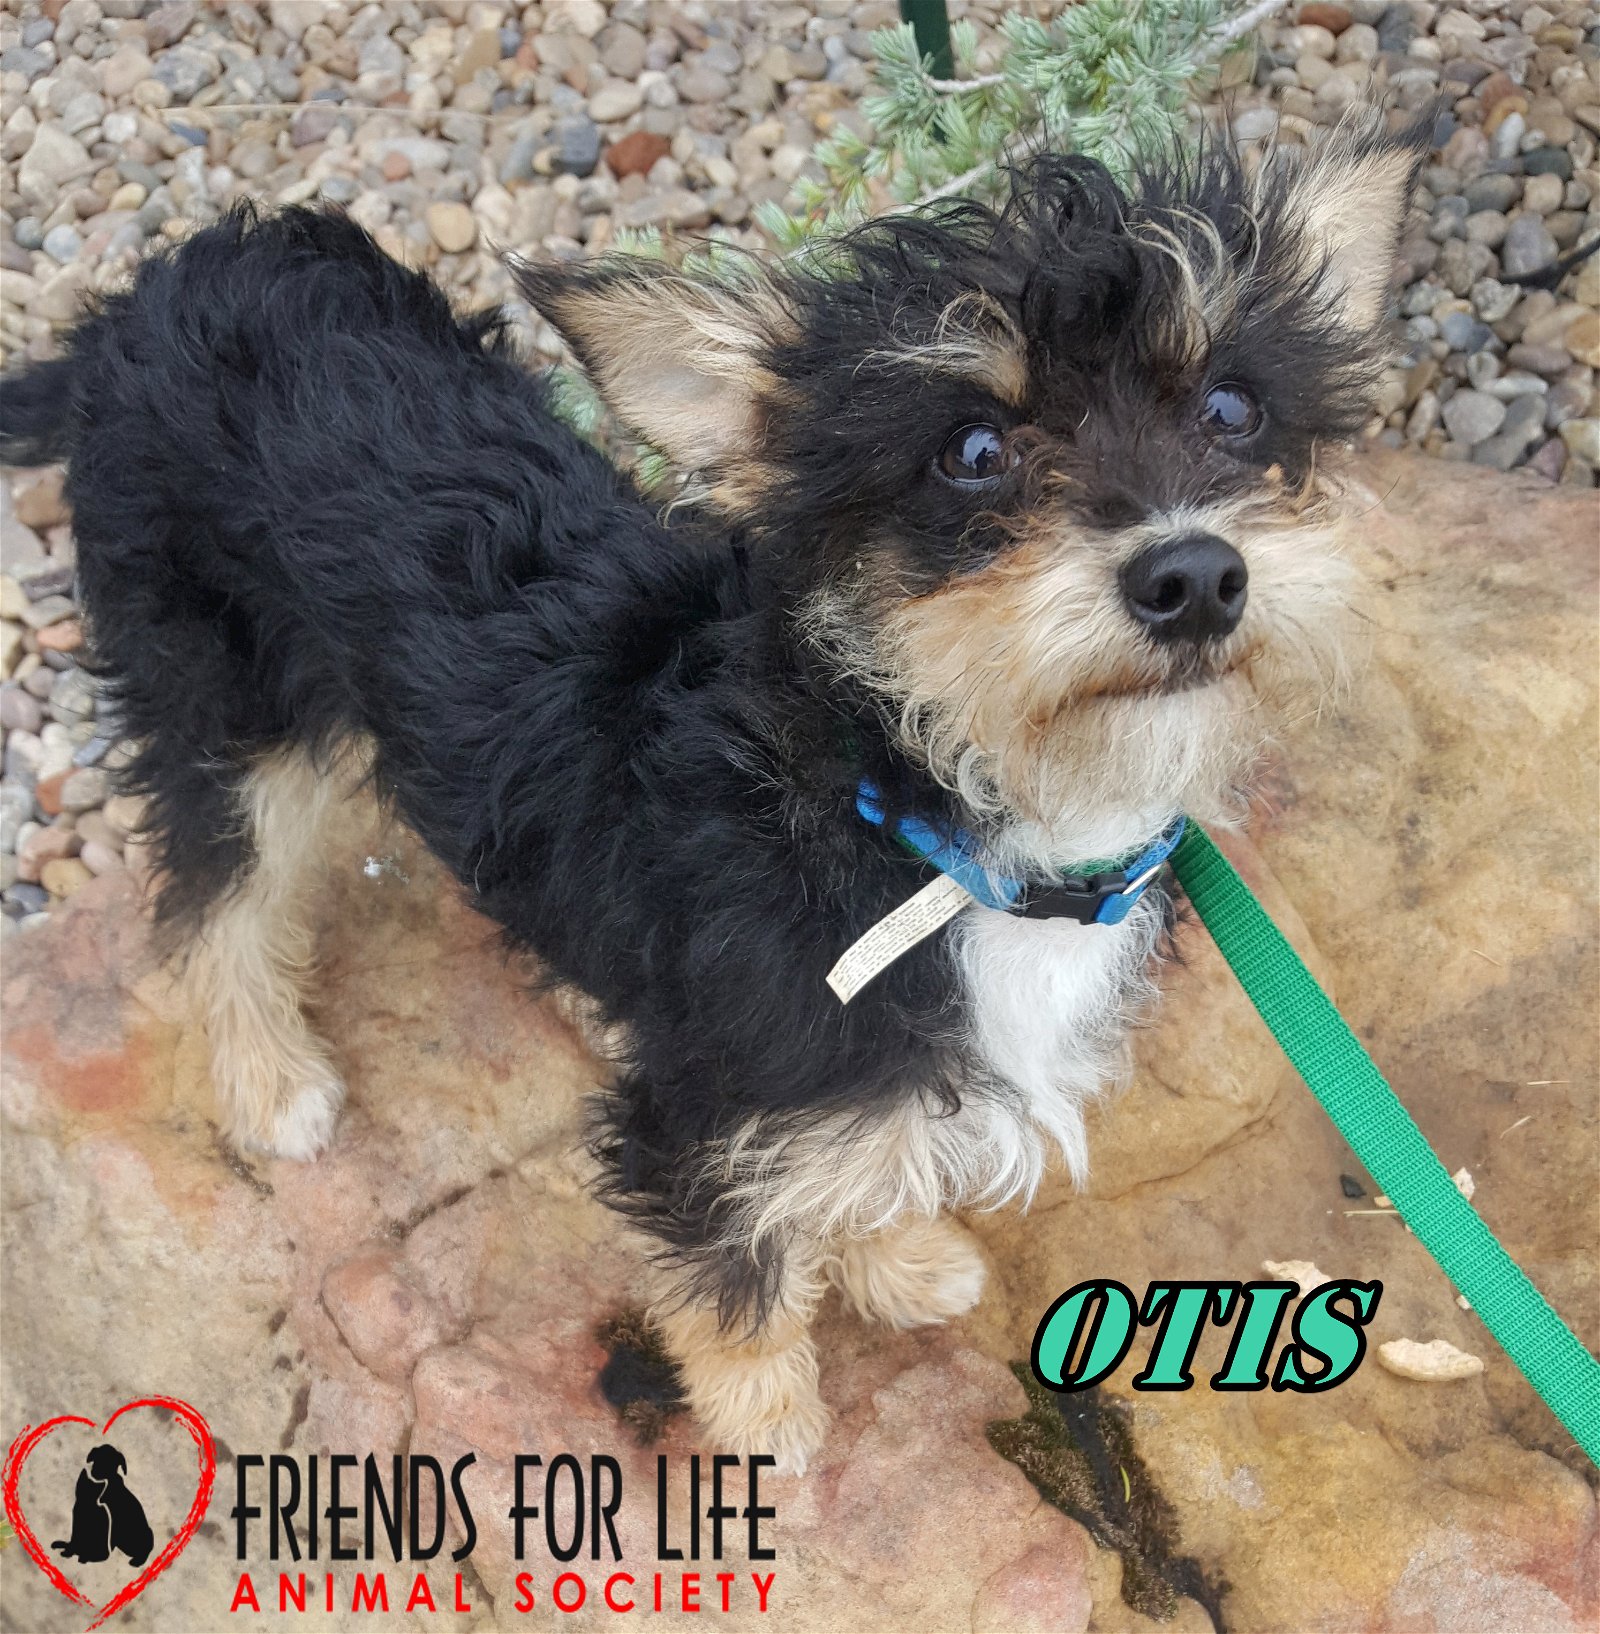 Otis' Web Page